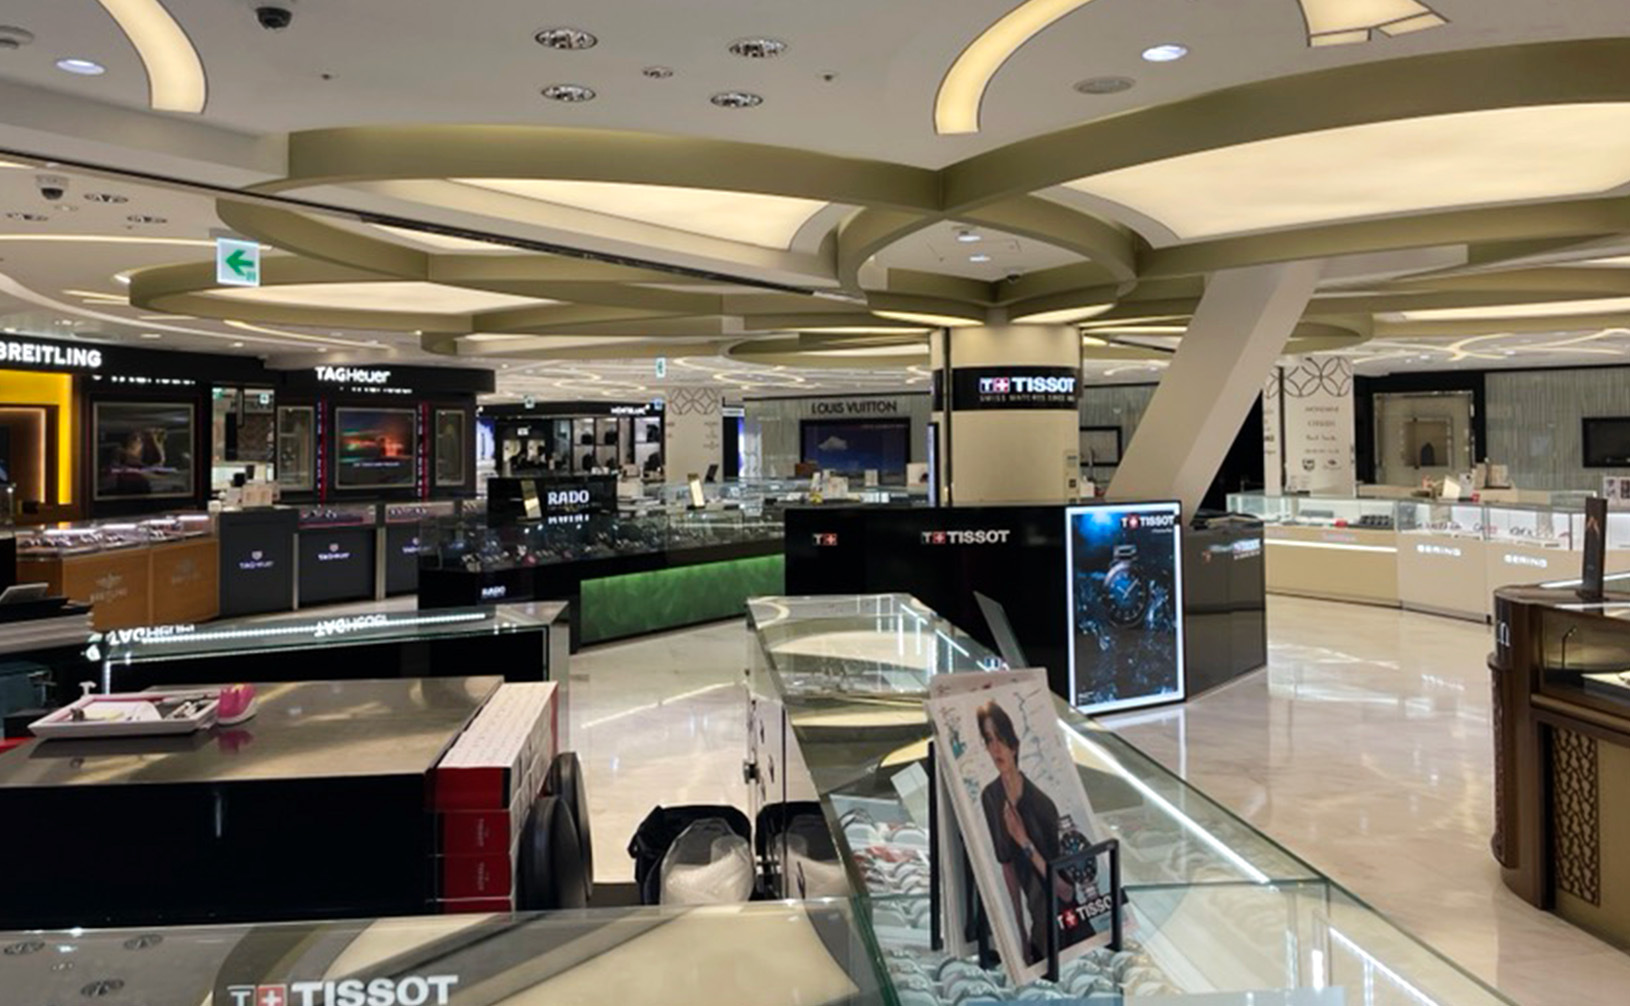 Louis Vuitton - LOTTE HOTEL JEJU Shopping Facilities